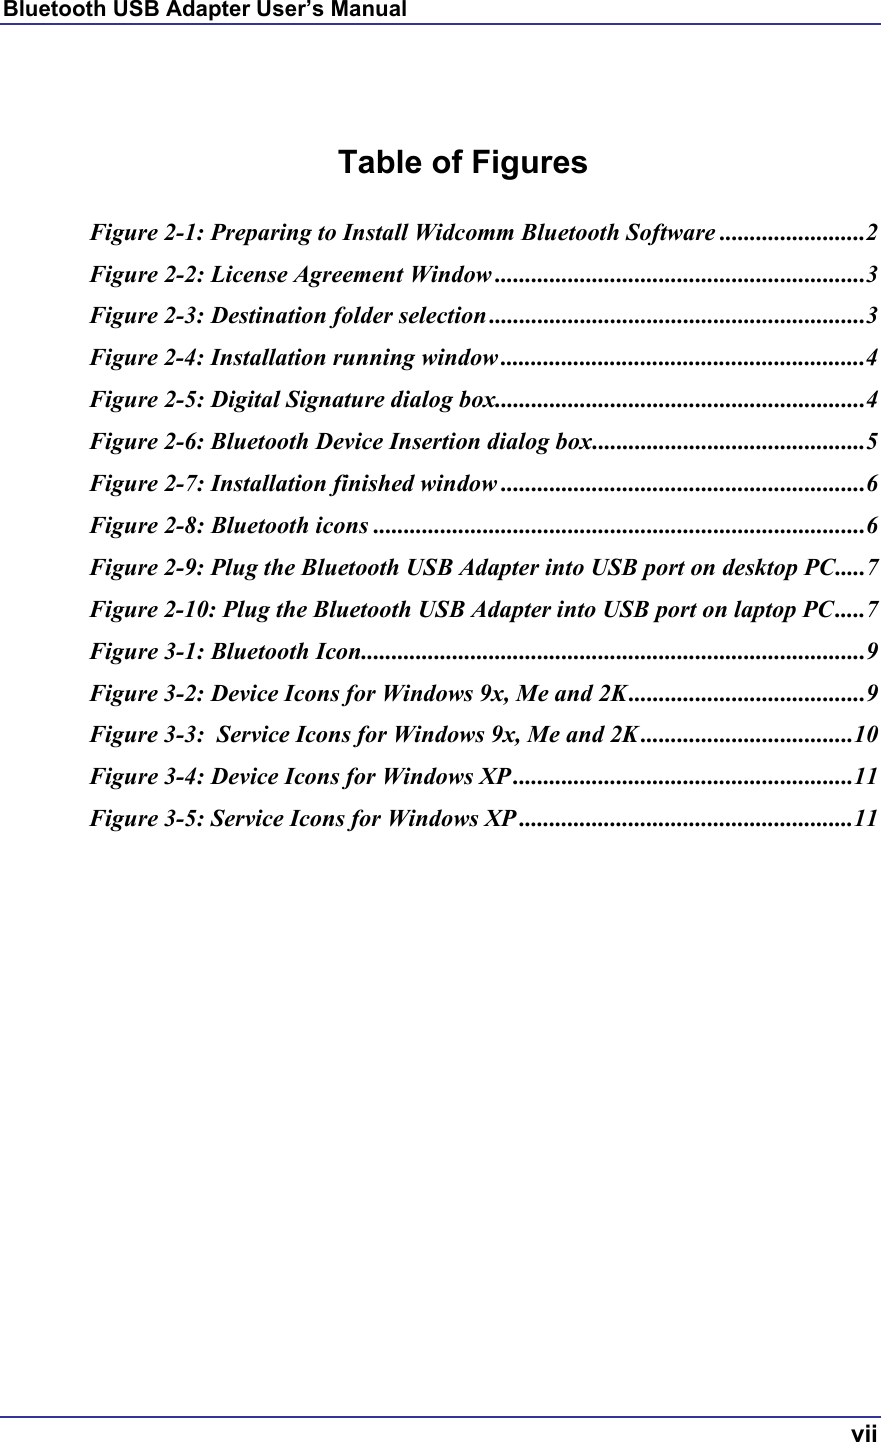 Bluetooth USB Adapter User’s Manual  vii   Table of Figures  Figure 2-1: Preparing to Install Widcomm Bluetooth Software ........................2 Figure 2-2: License Agreement Window .............................................................3 Figure 2-3: Destination folder selection ..............................................................3 Figure 2-4: Installation running window ............................................................4 Figure 2-5: Digital Signature dialog box.............................................................4 Figure 2-6: Bluetooth Device Insertion dialog box.............................................5 Figure 2-7: Installation finished window ............................................................6 Figure 2-8: Bluetooth icons .................................................................................6 Figure 2-9: Plug the Bluetooth USB Adapter into USB port on desktop PC.....7 Figure 2-10: Plug the Bluetooth USB Adapter into USB port on laptop PC.....7 Figure 3-1: Bluetooth Icon...................................................................................9 Figure 3-2: Device Icons for Windows 9x, Me and 2K.......................................9 Figure 3-3:  Service Icons for Windows 9x, Me and 2K...................................10 Figure 3-4: Device Icons for Windows XP........................................................11 Figure 3-5: Service Icons for Windows XP .......................................................11   